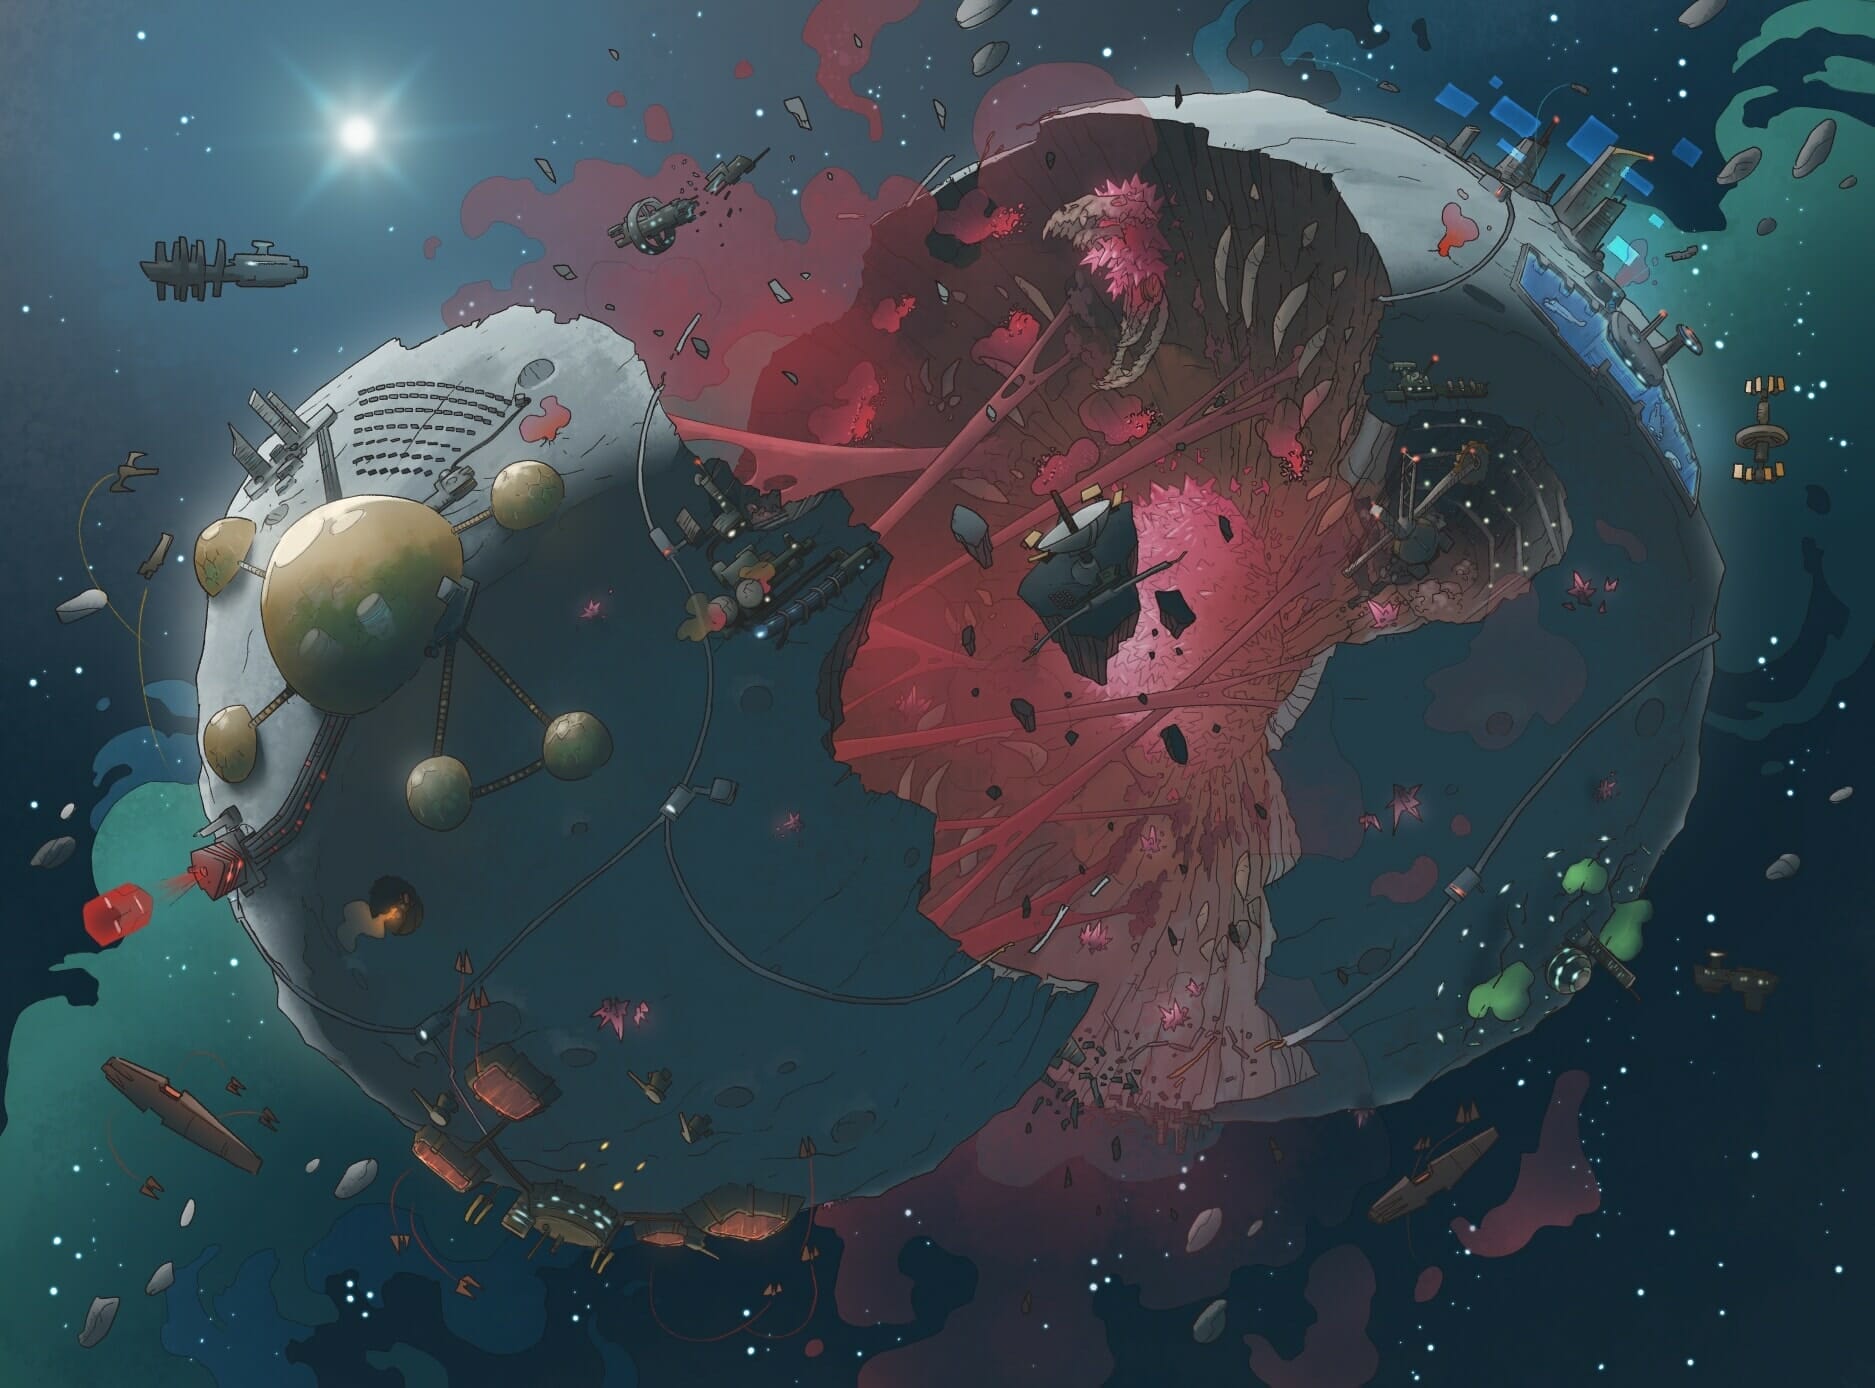 sci-fi art: broken planet/round space station